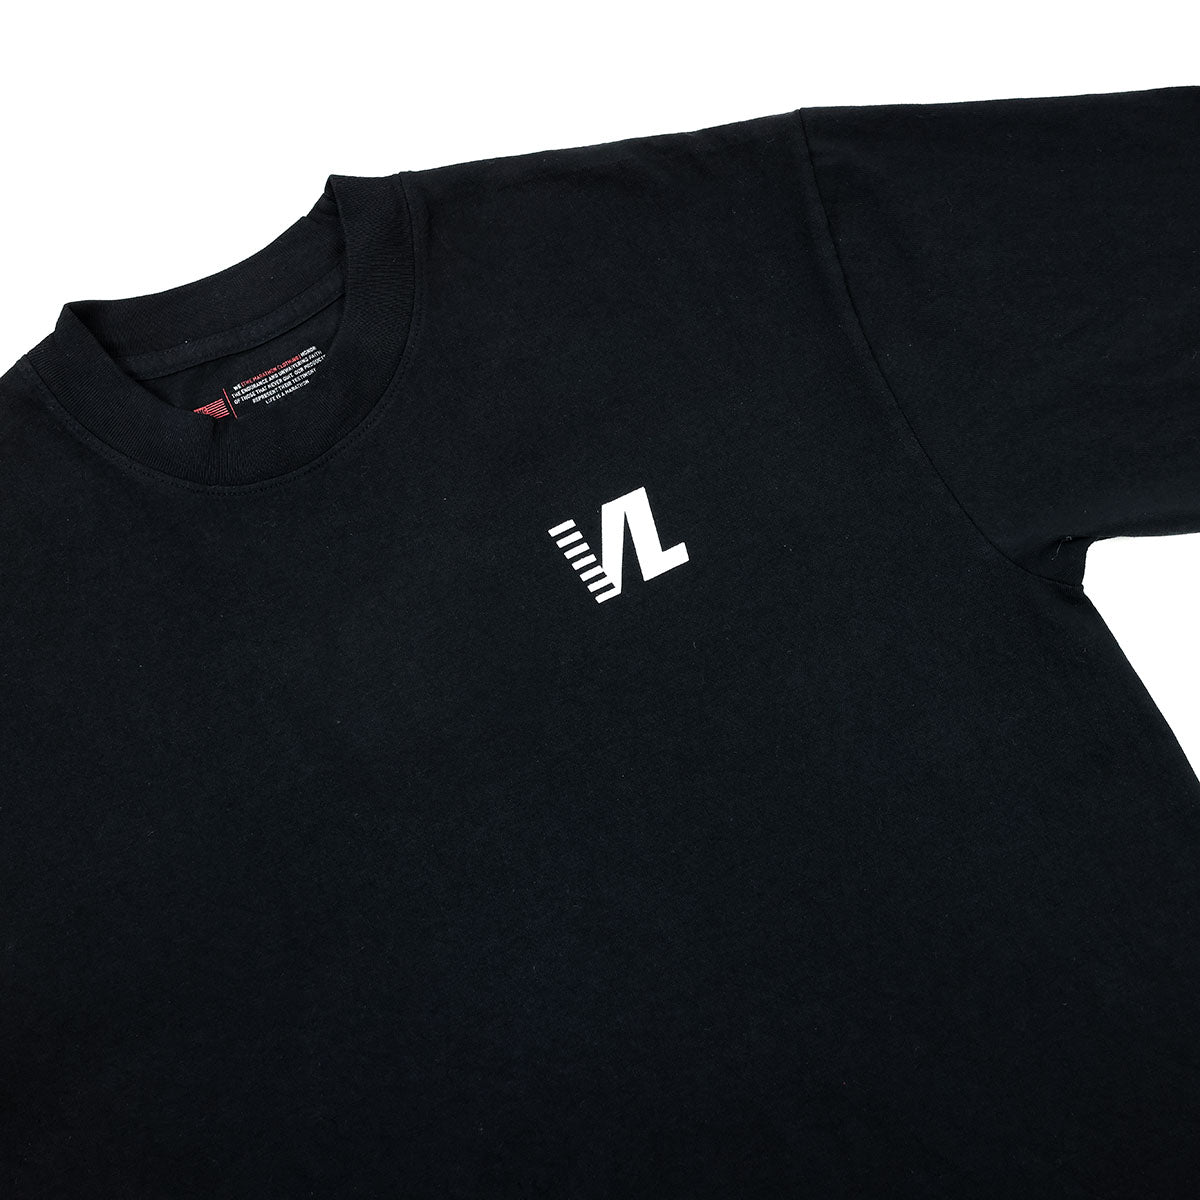 Vl For Victory Lap Shirt - TeeUni